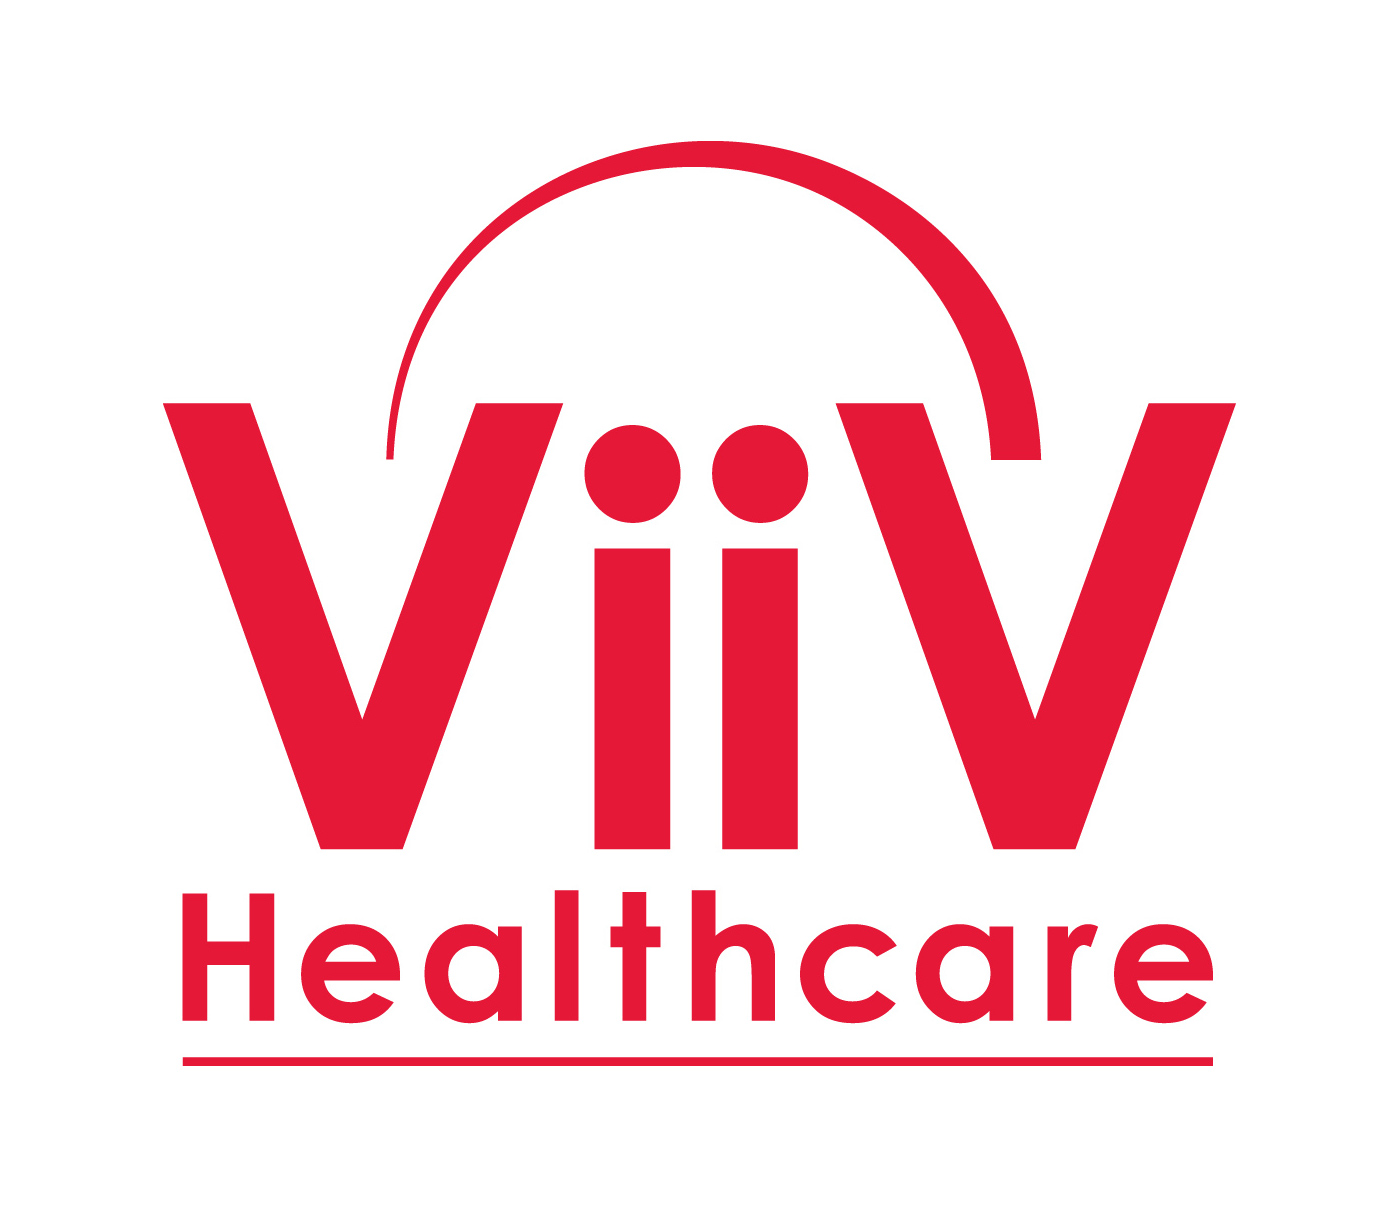 Logo ViiV Healthcare